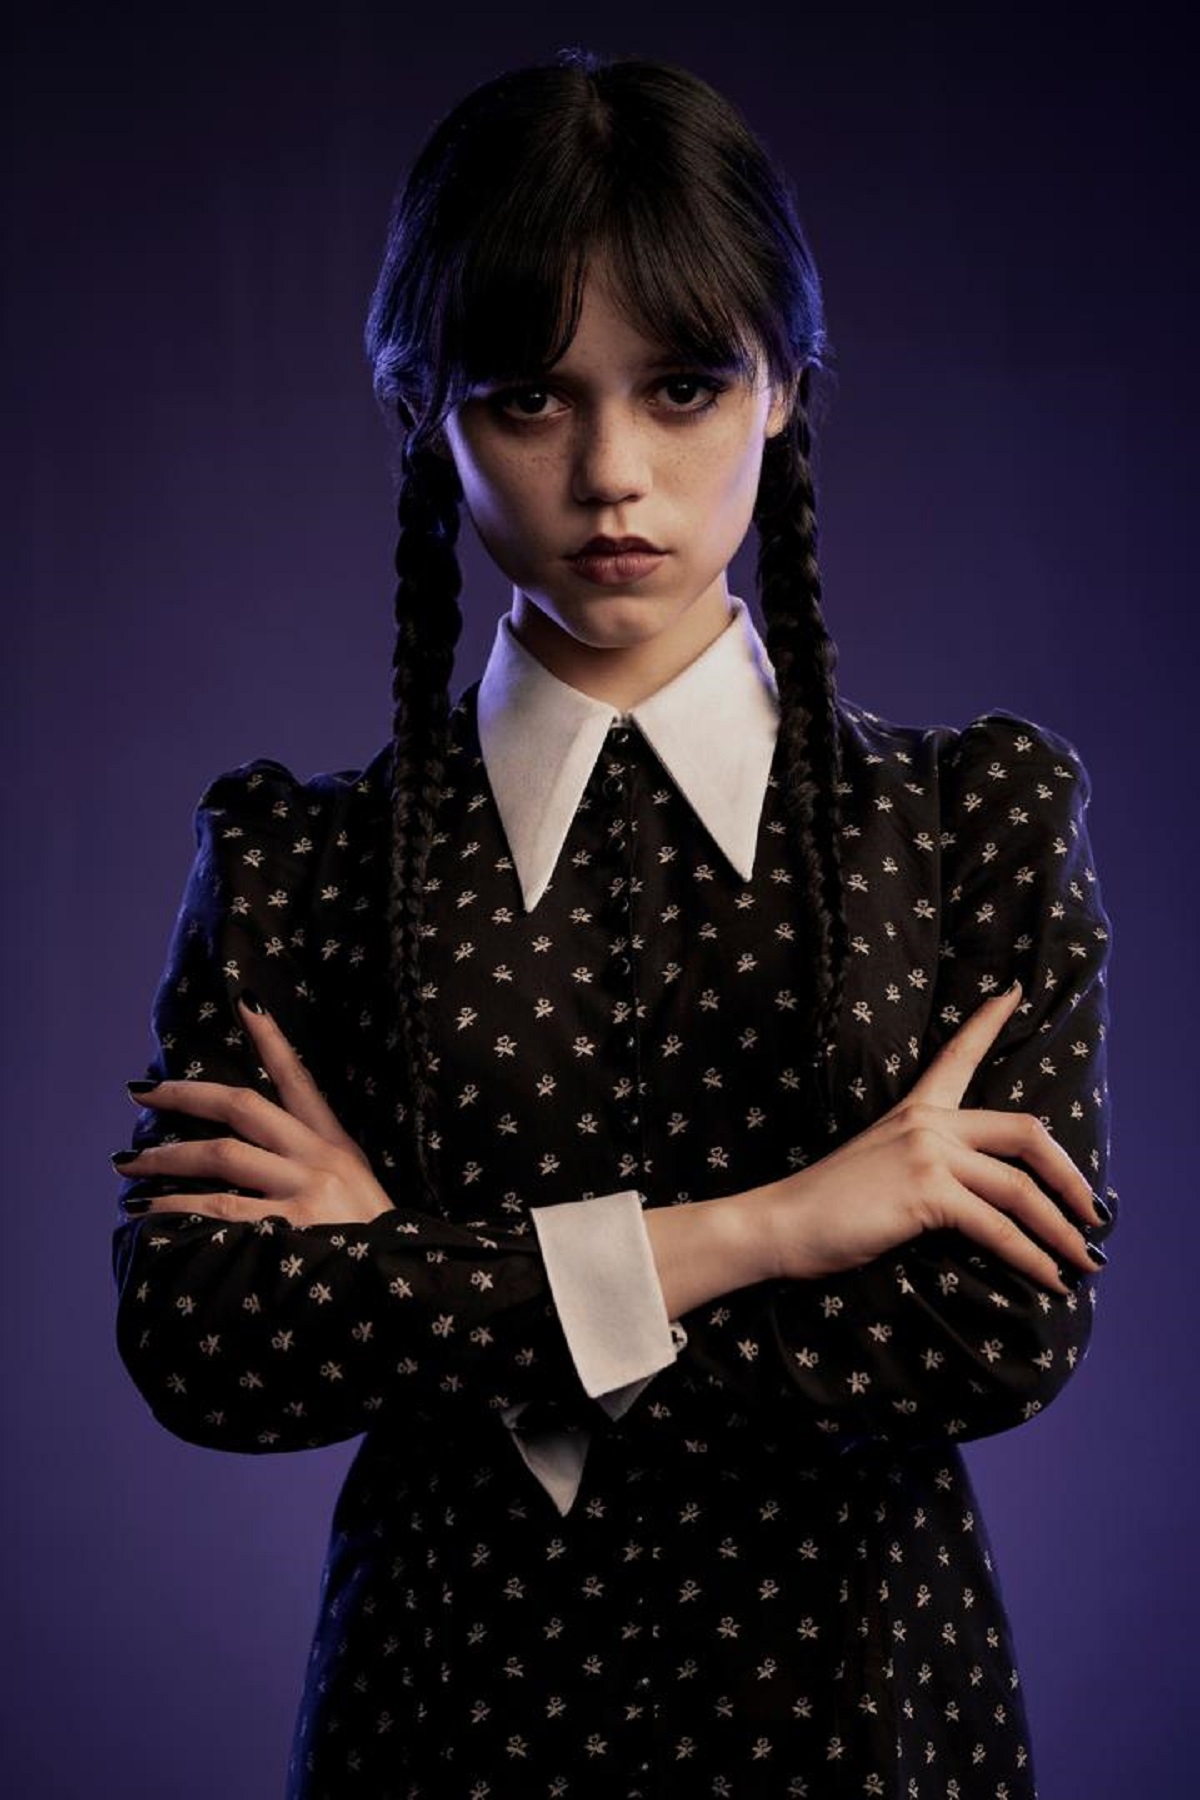 Jenna Ortega as Wednesday Addams in Netflix's Wednesday series.